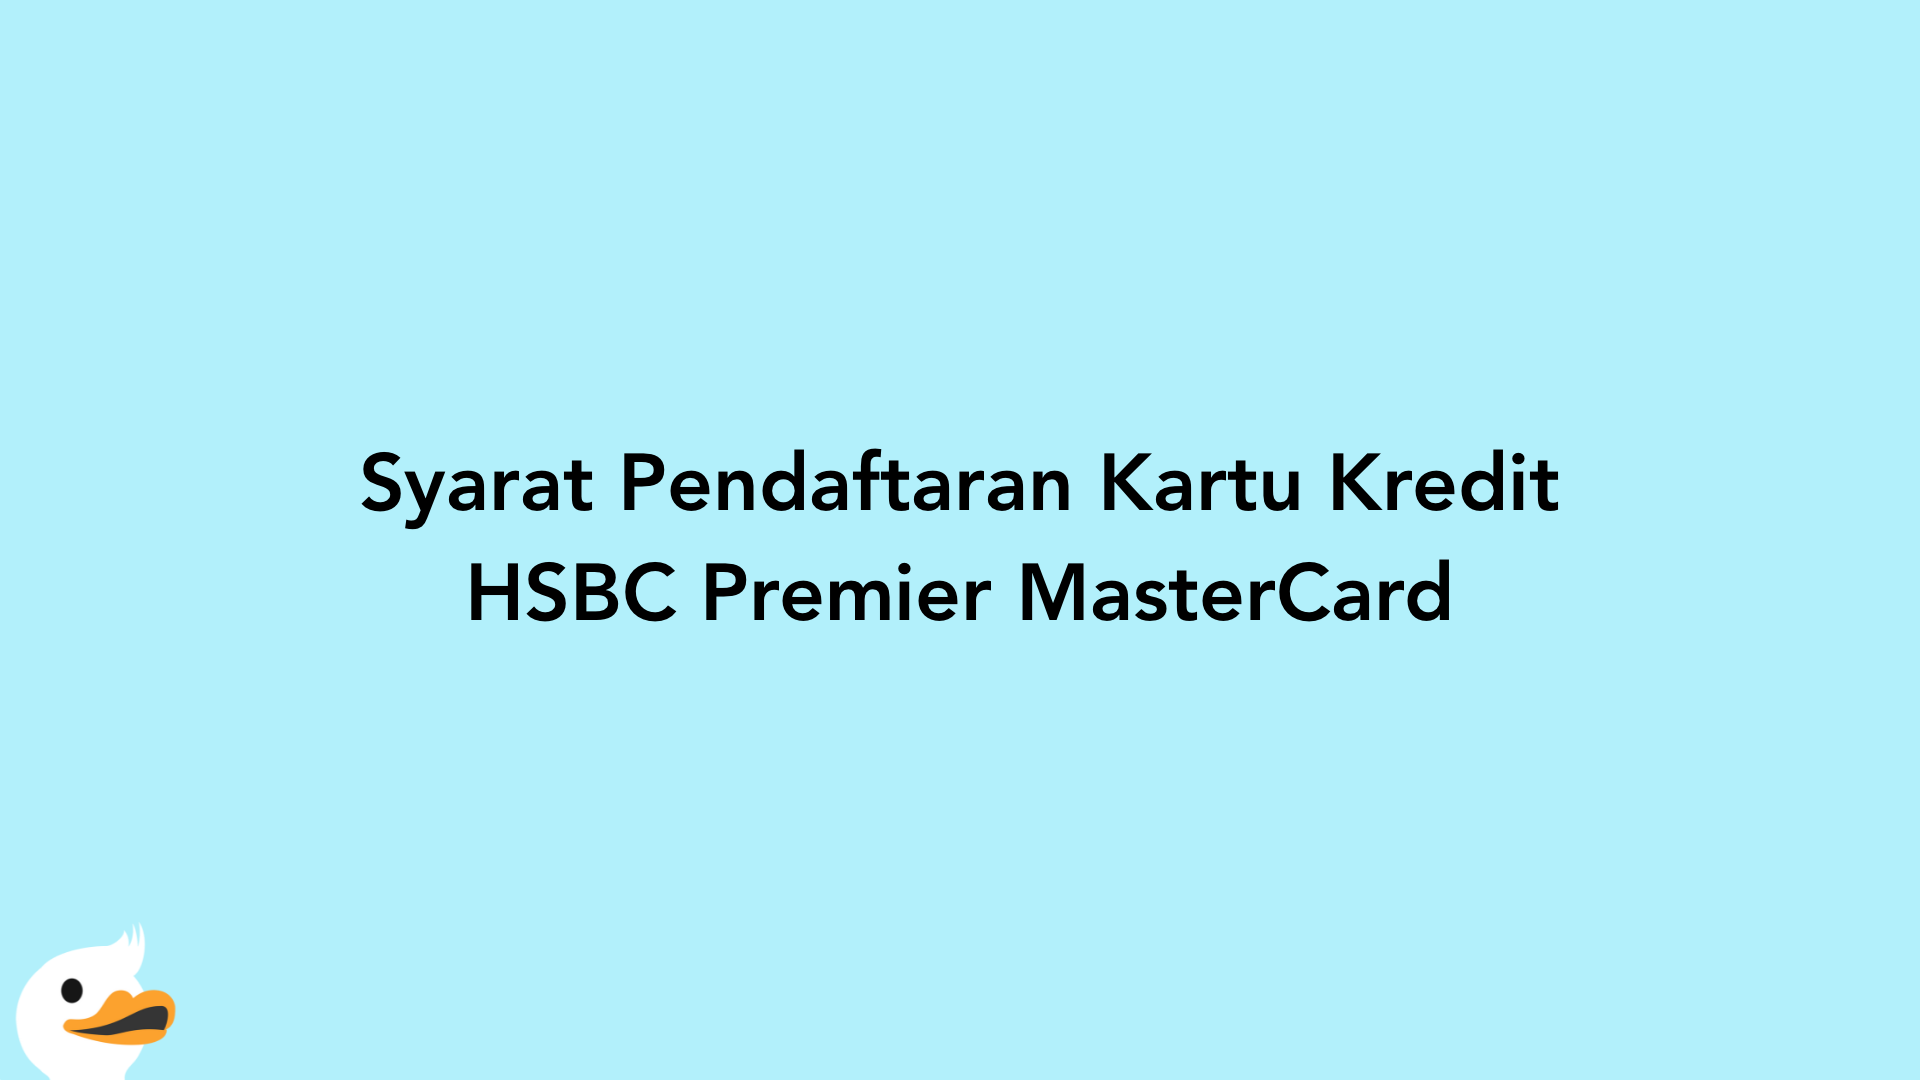 Syarat Pendaftaran Kartu Kredit HSBC Premier MasterCard